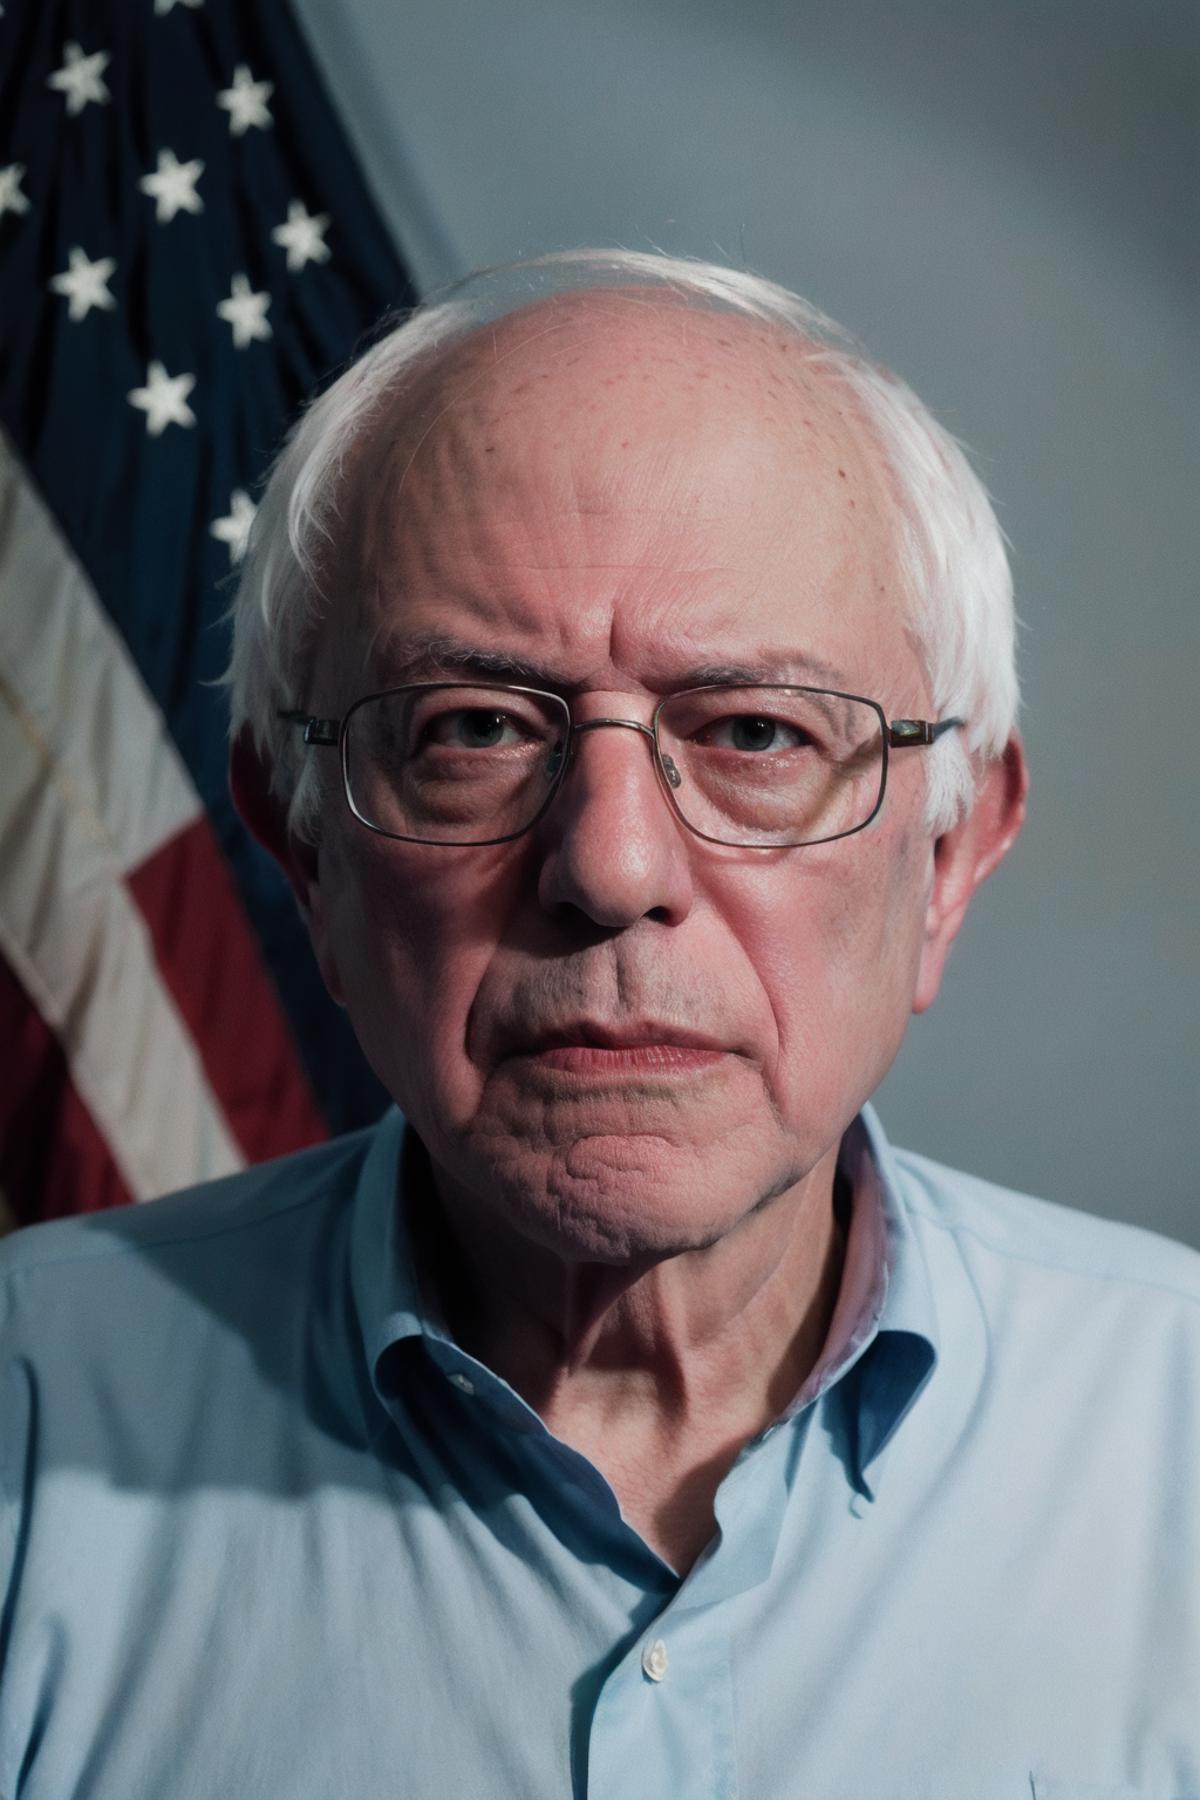 Bernie Sanders - USA | Politician image by IndolentCat